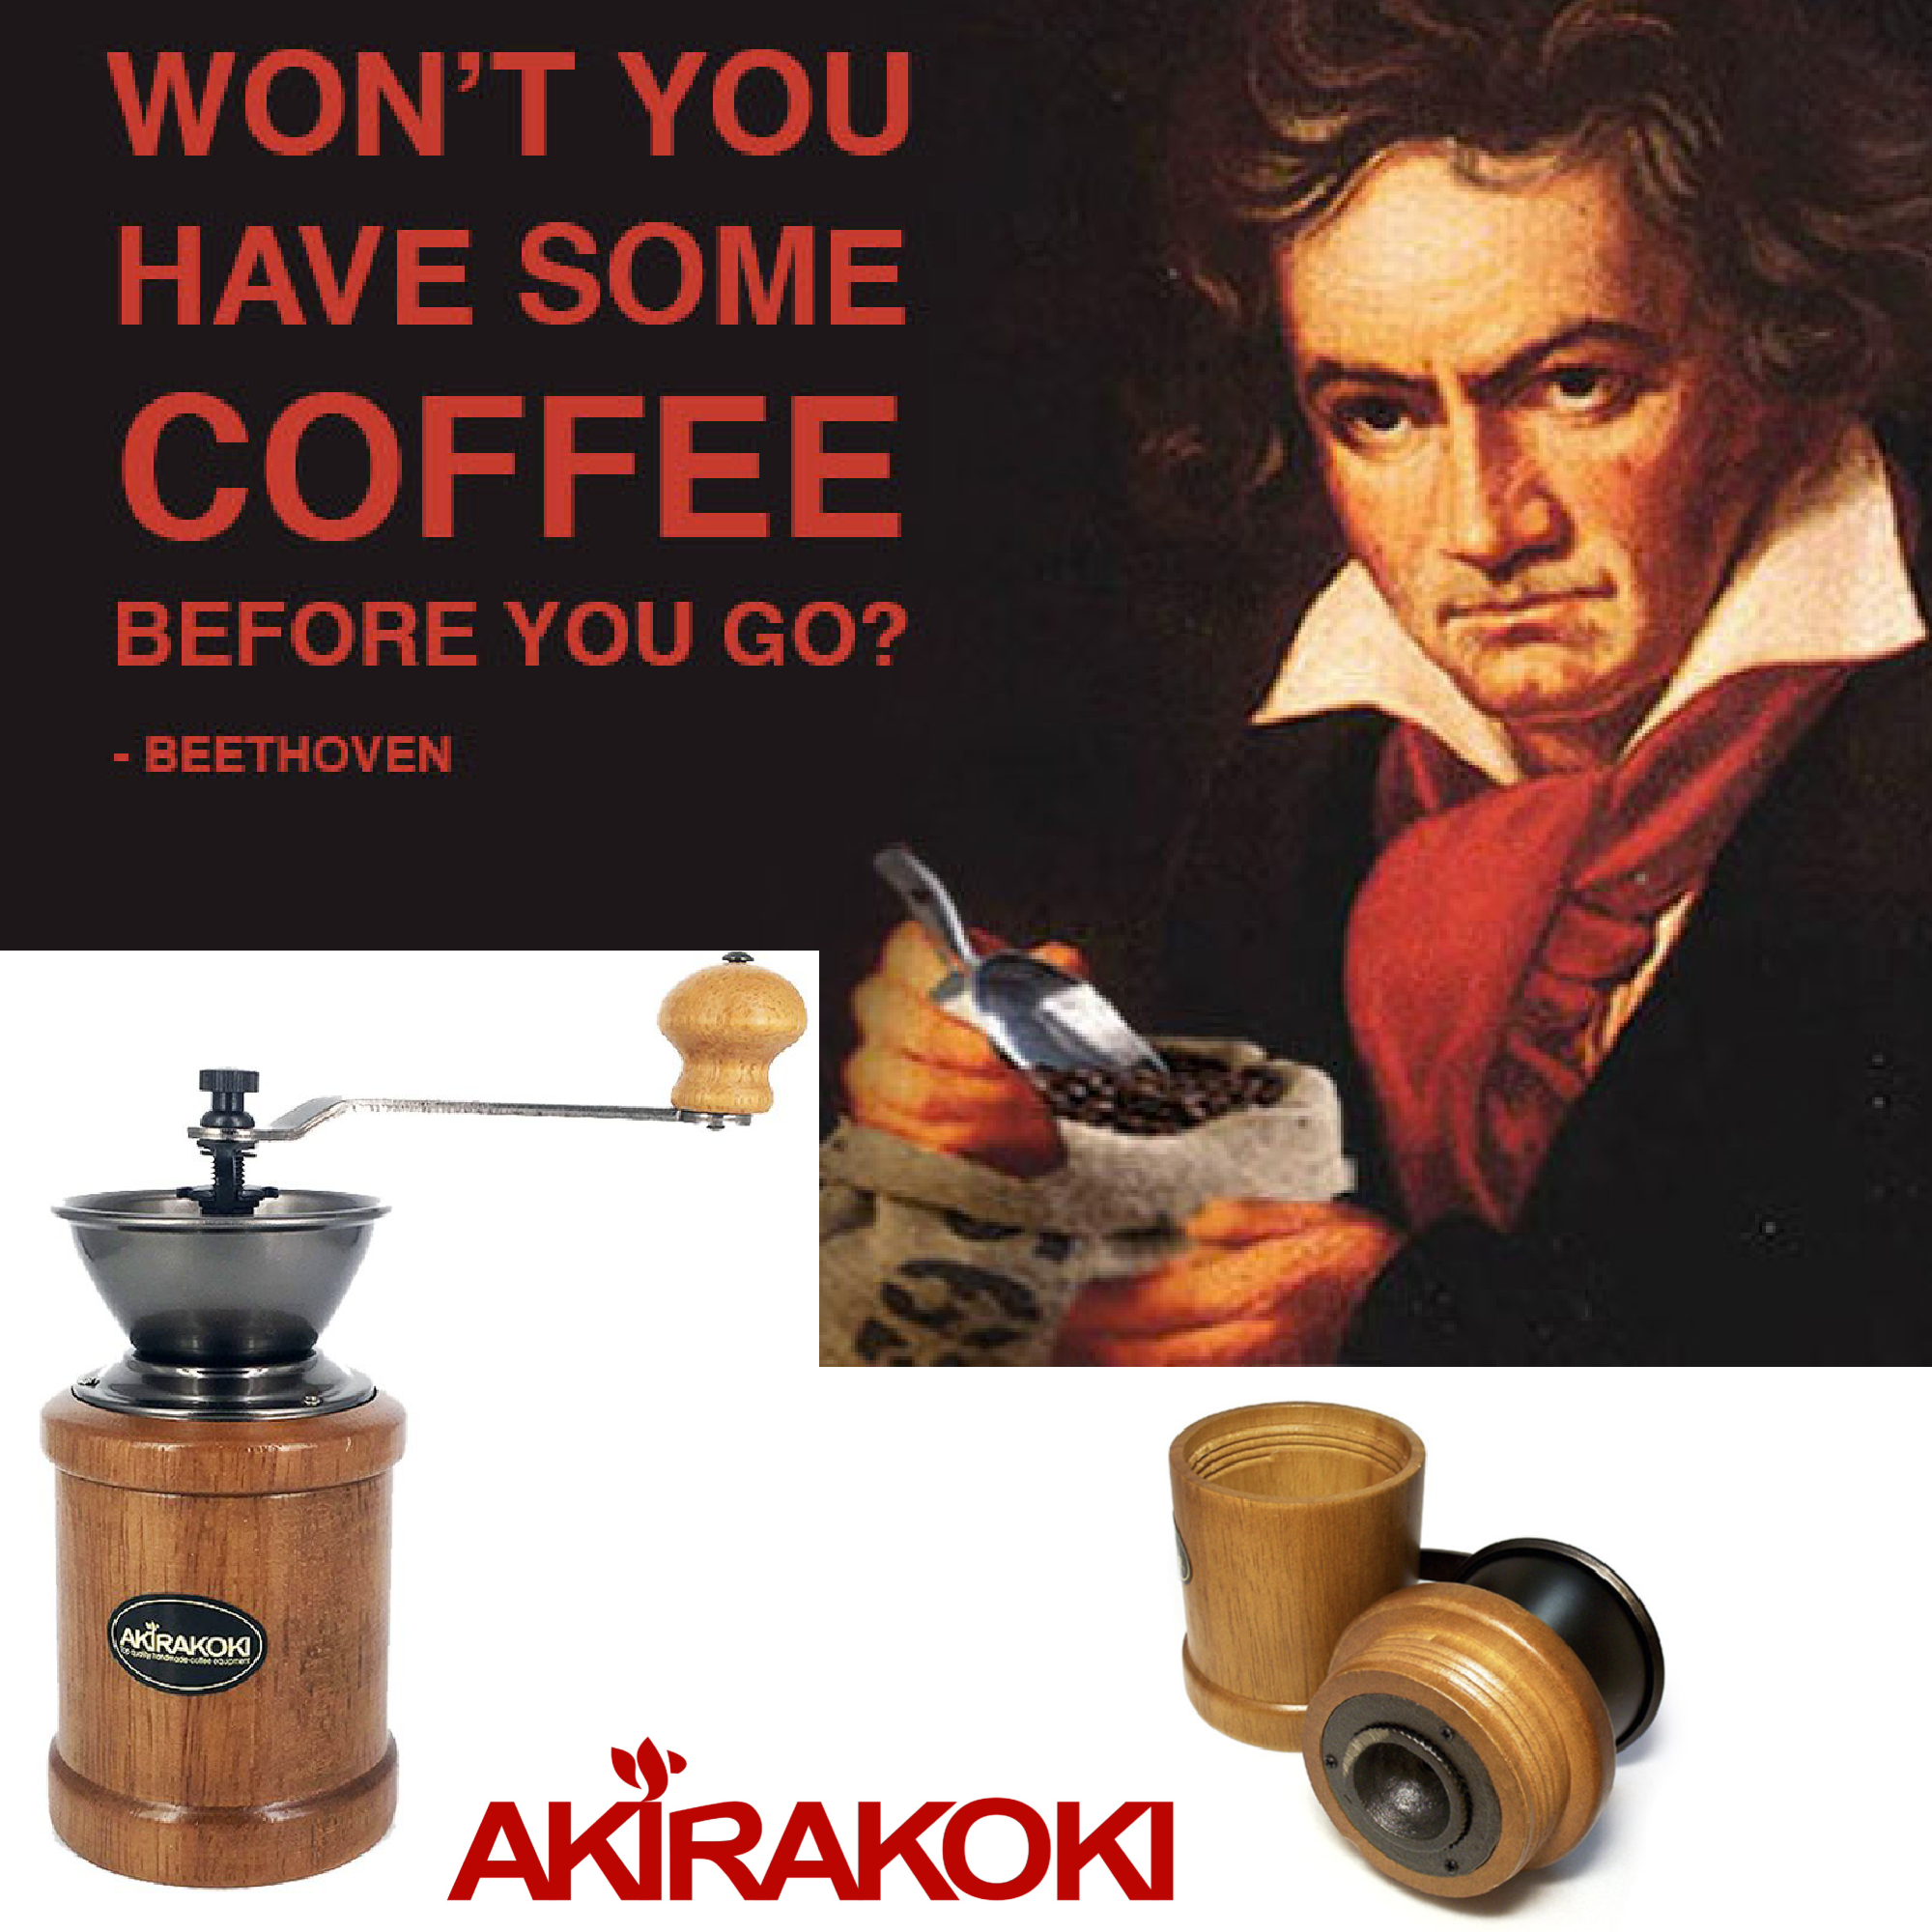 AKIRAKOKI® Manual Coffee Bean Grinder Wooden Cast Iron Burr - A17 – PJT  prime